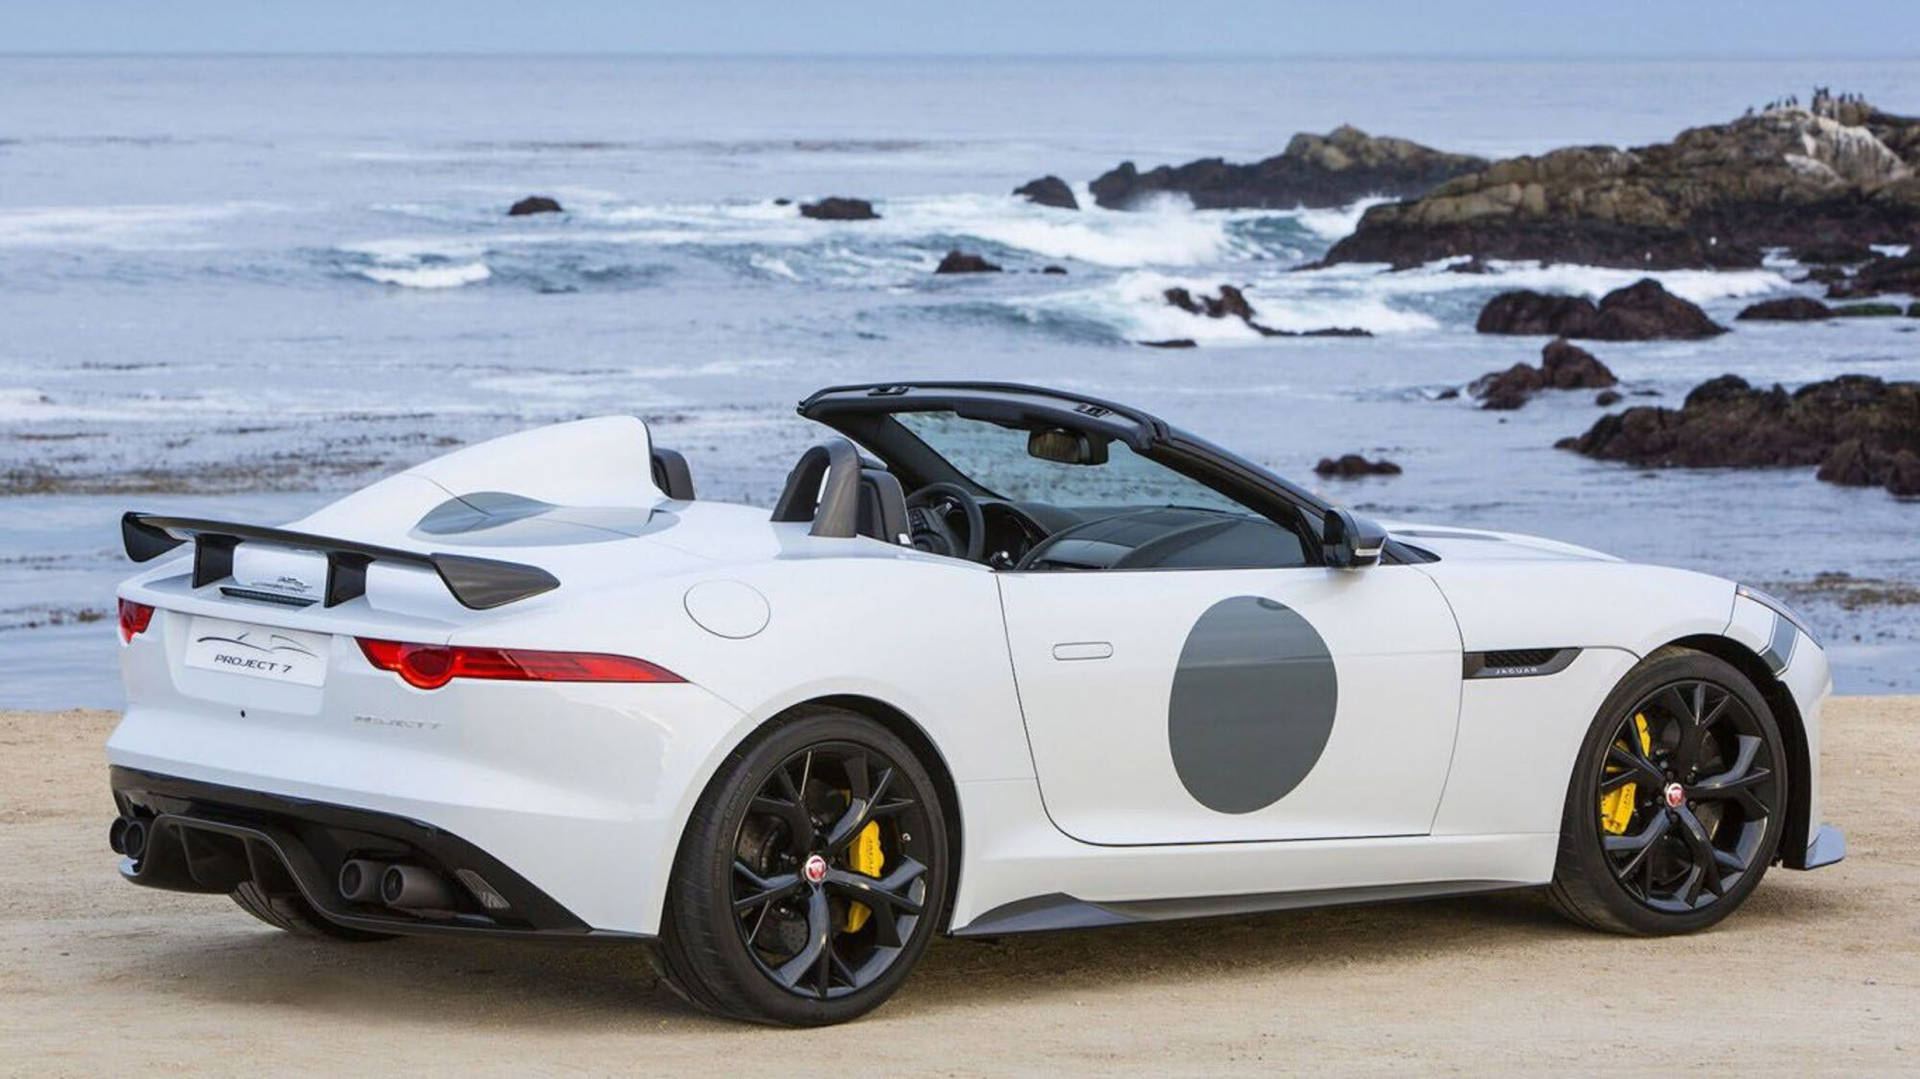 Luxurious Modern Jaguar Car On A Beach